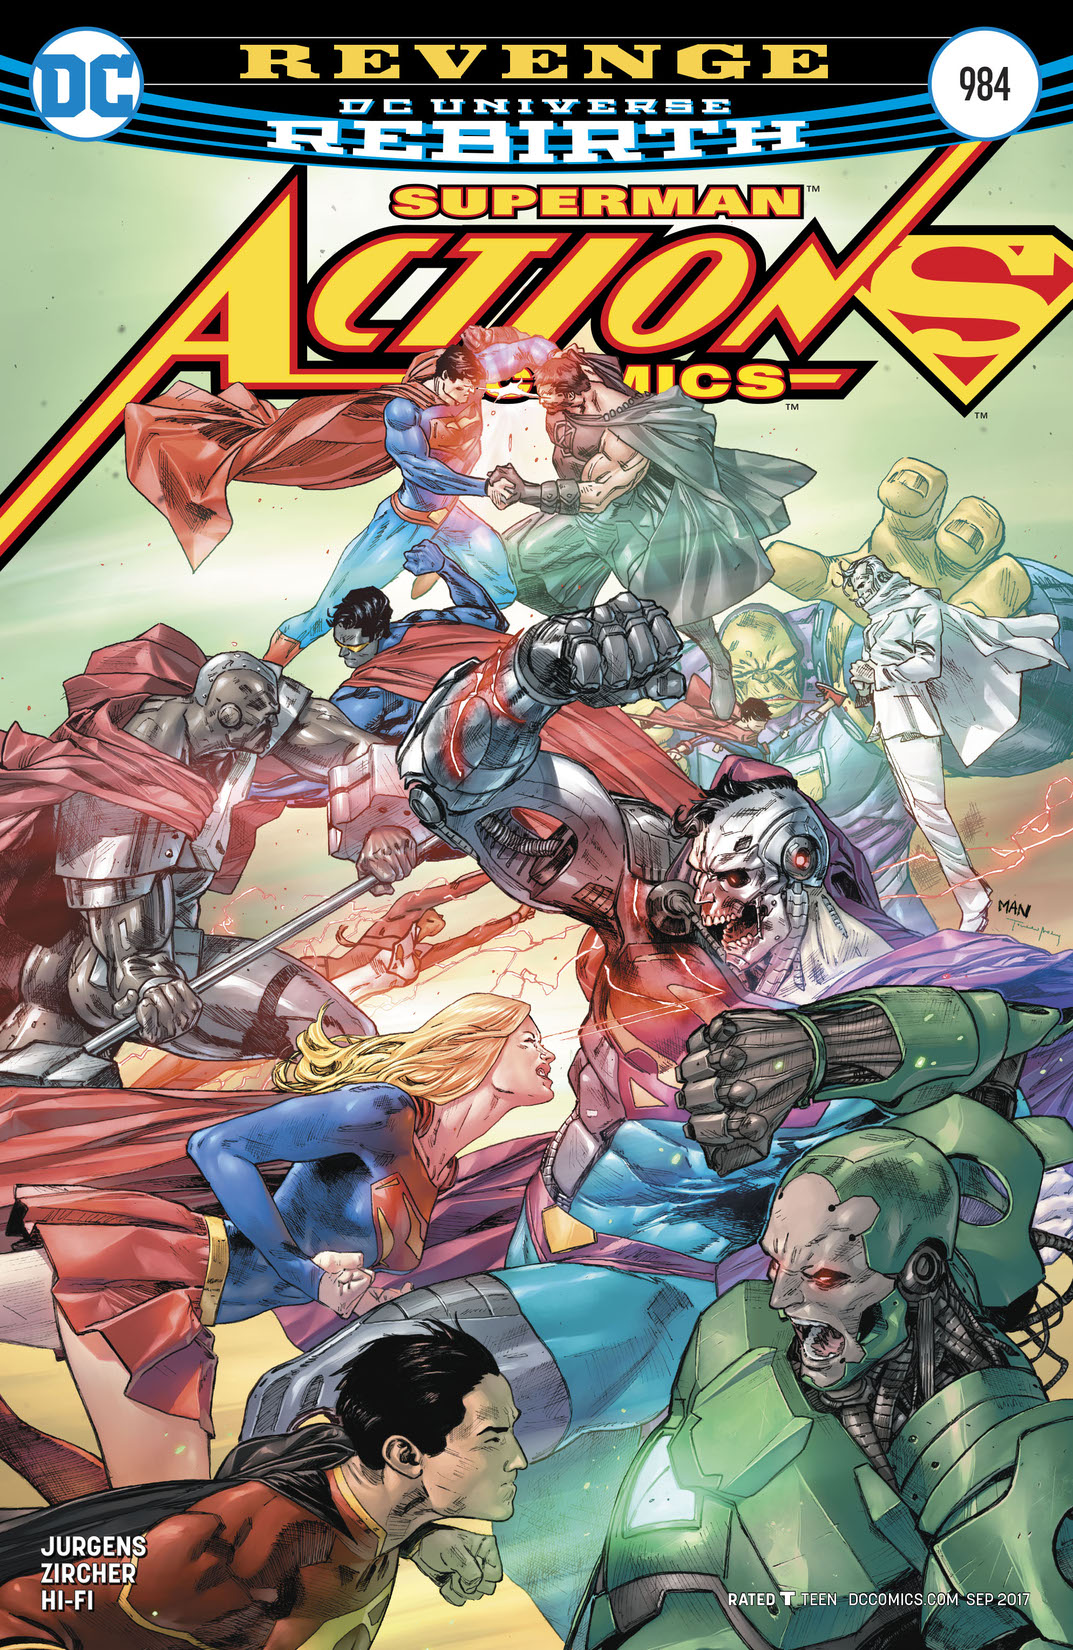 Action Comics (2016-) #984 preview images